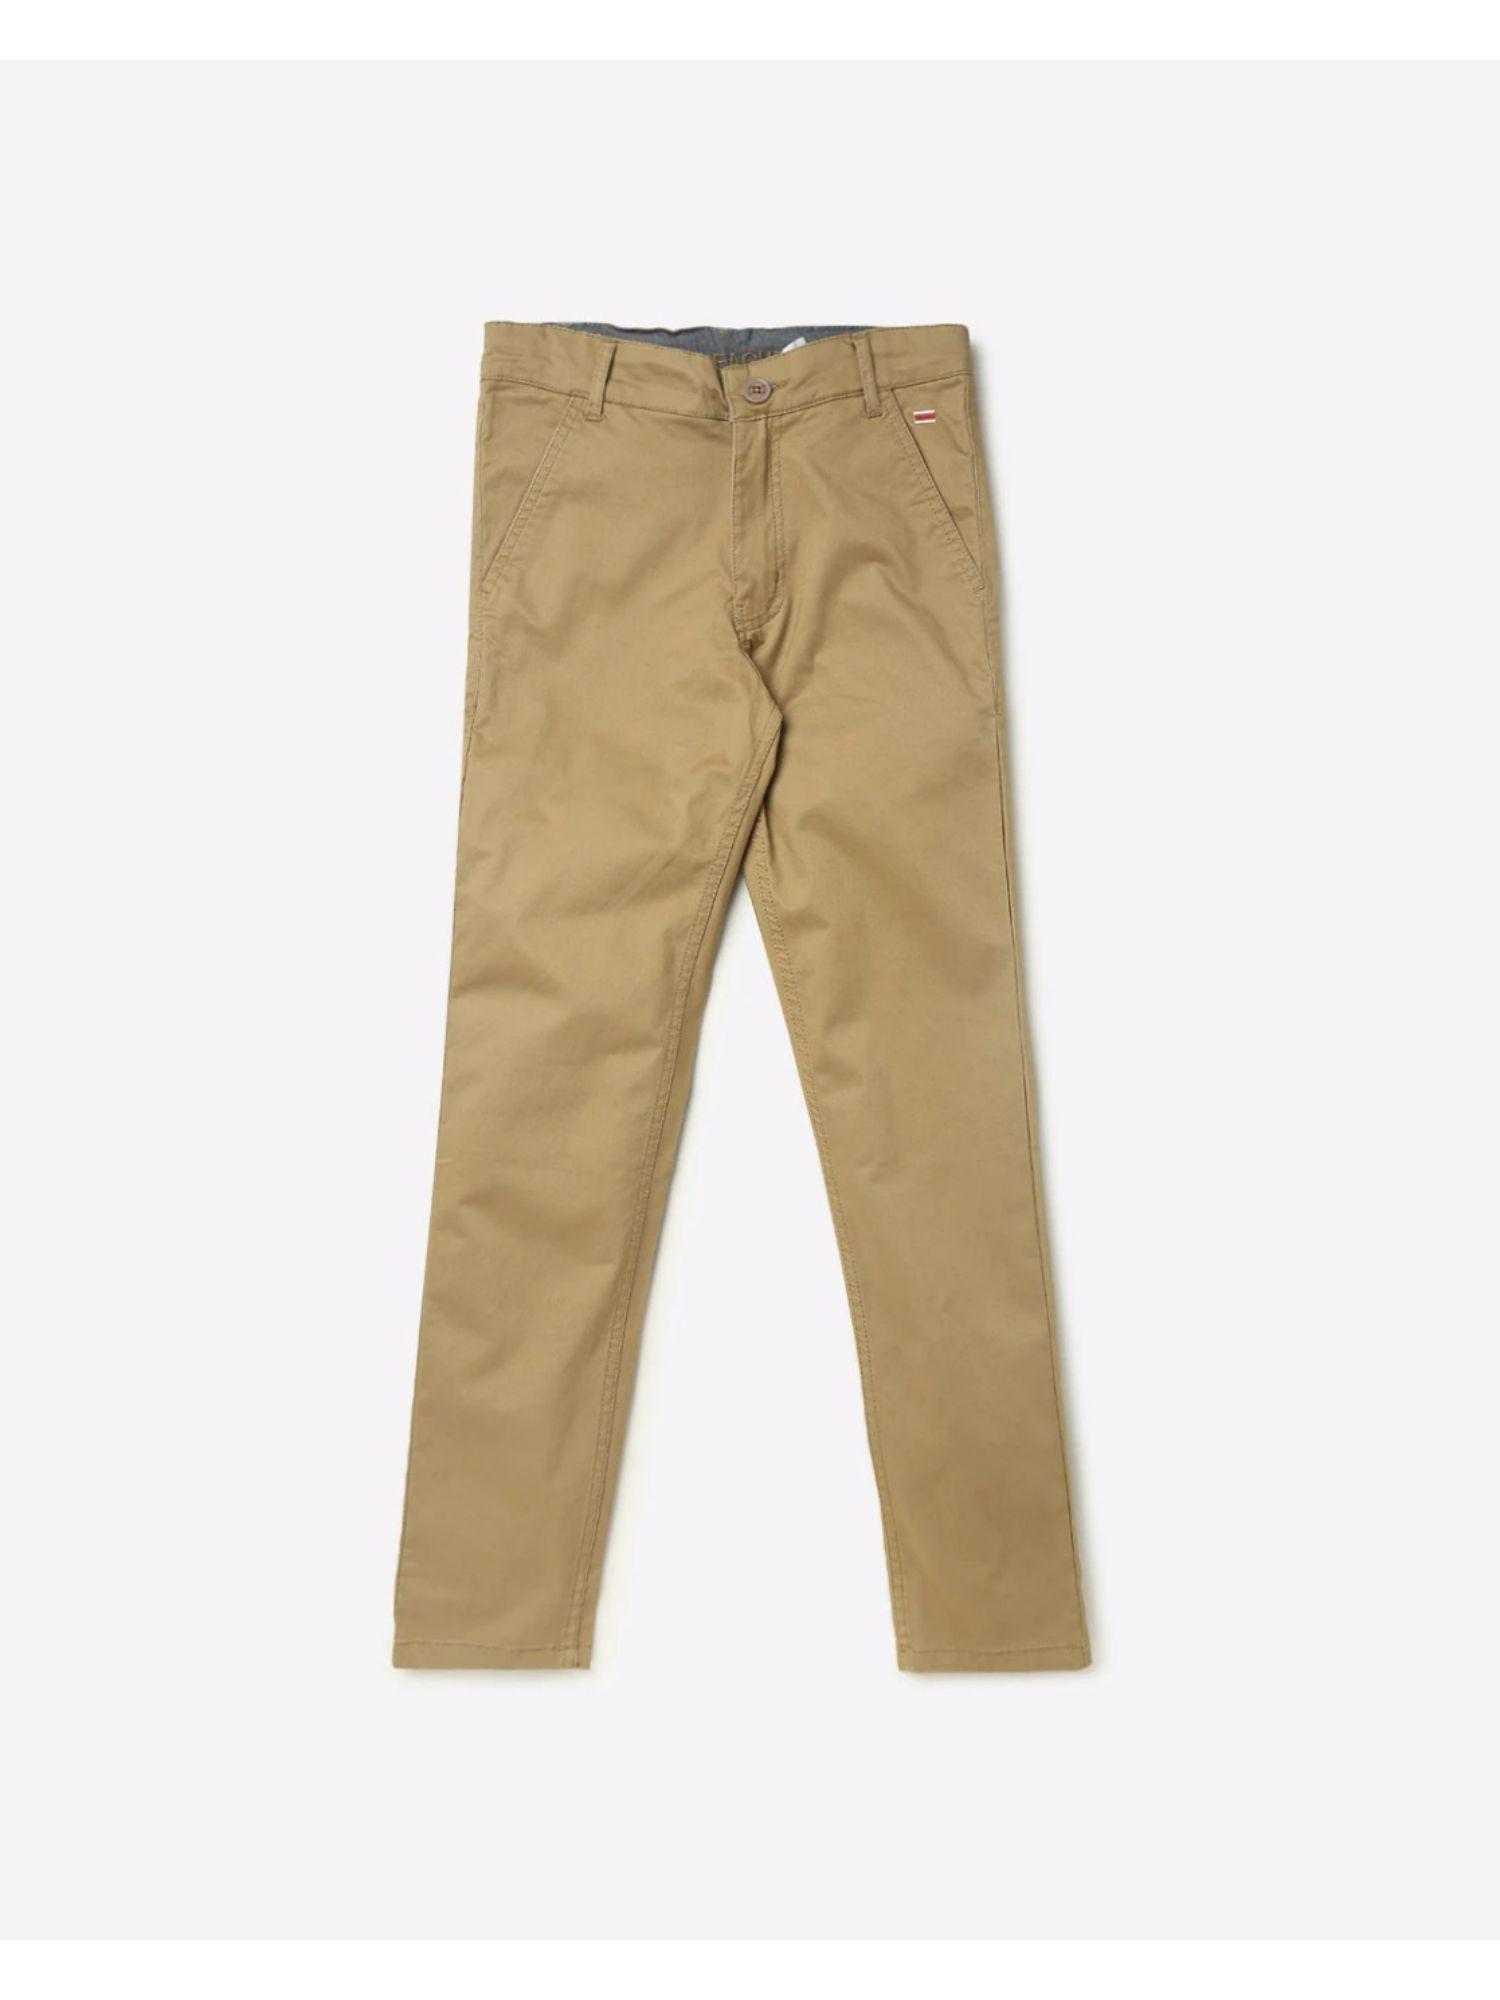 boy's pants in dark khakhi color